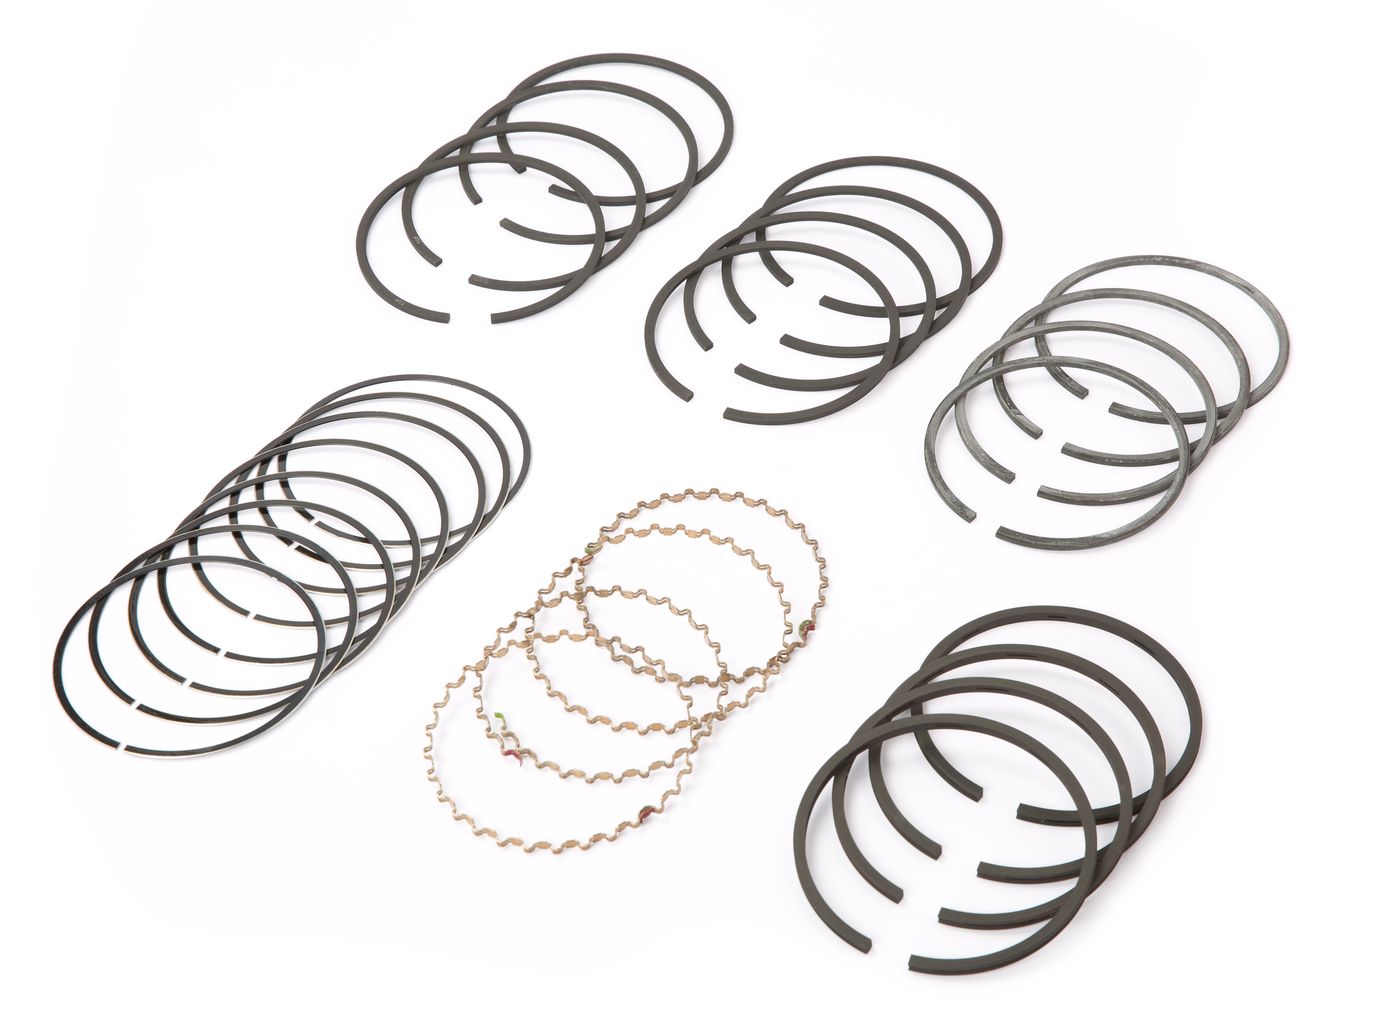 Satz Kolbenringe
Piston ring set
Set de segments de pistons
Jueg